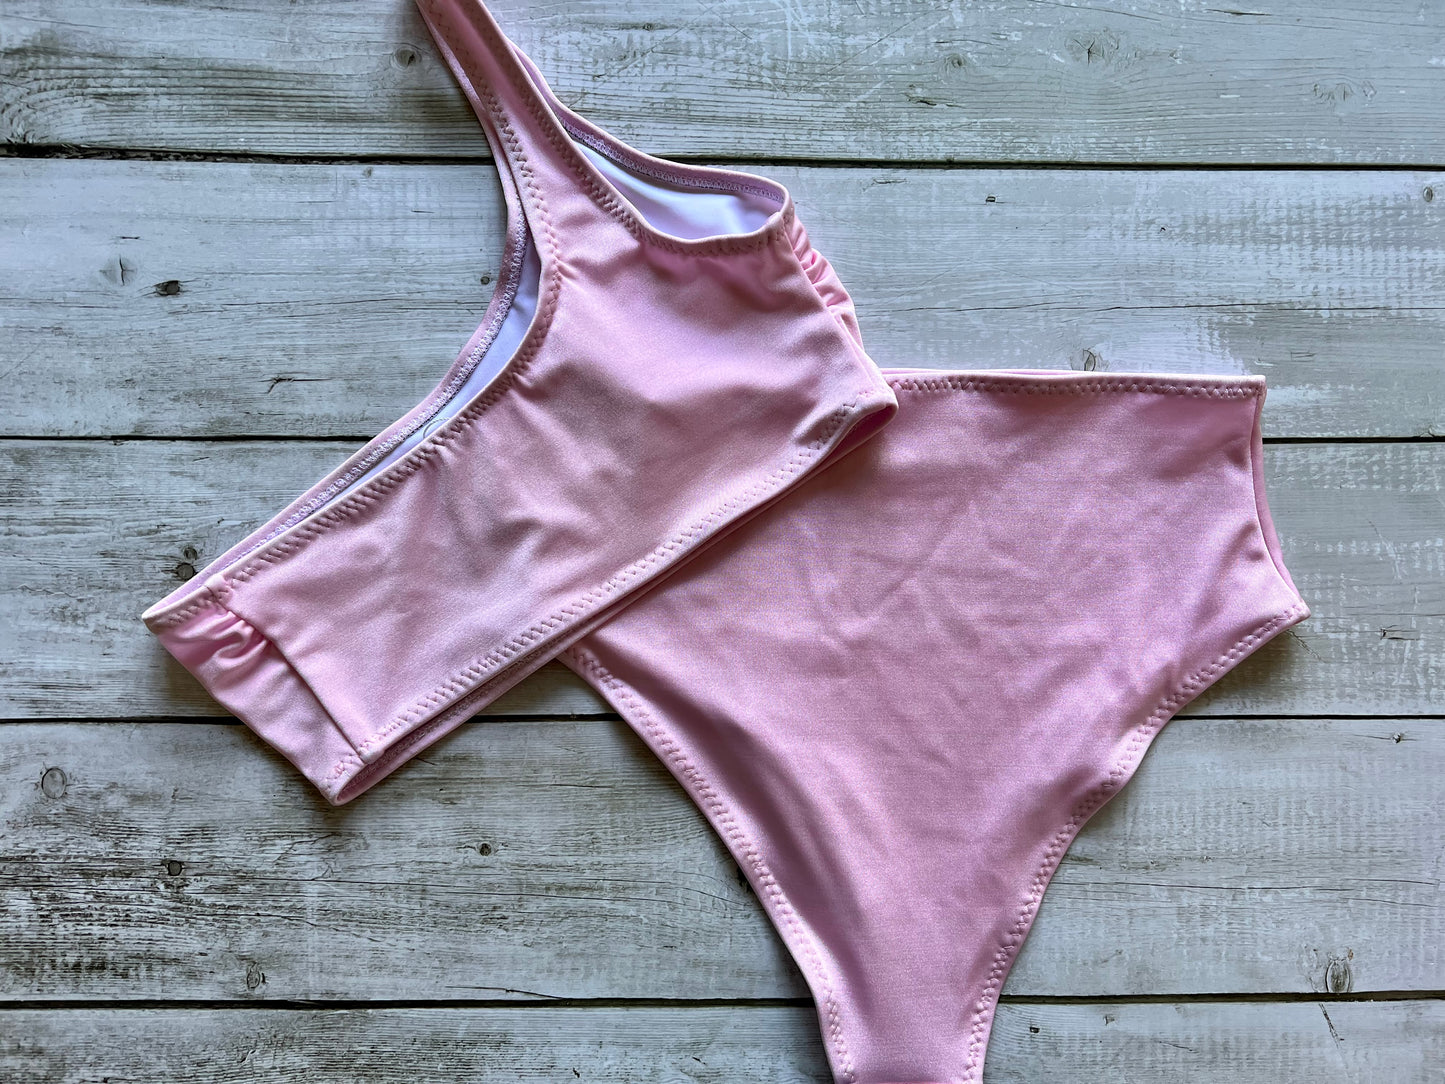 Baby Pink Bikini - Size 12